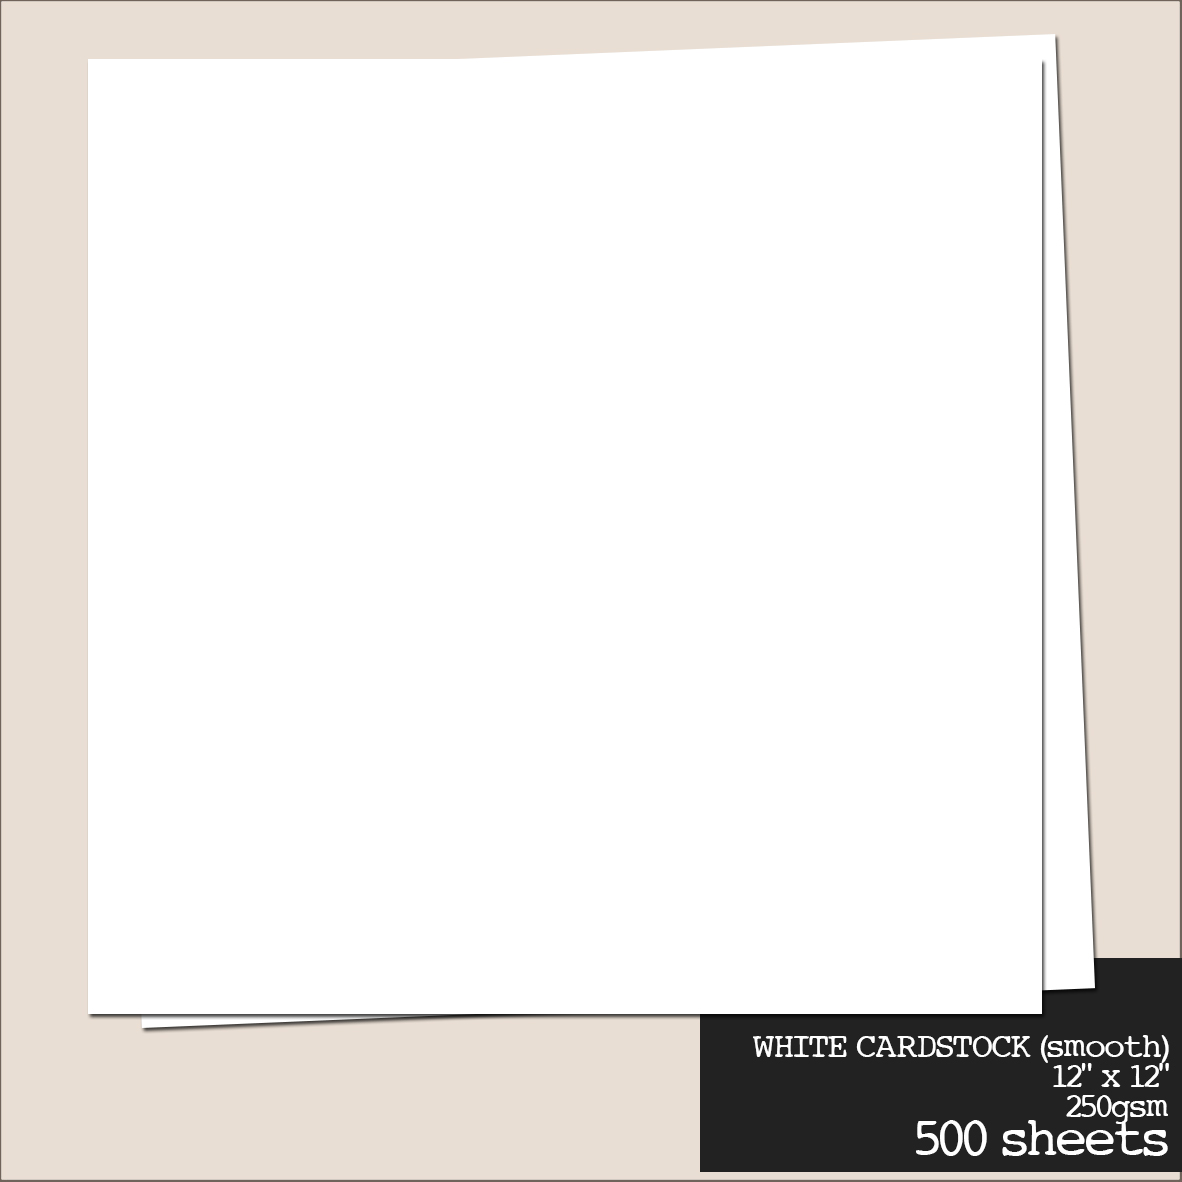  65lb Card Stock - White Cardstock Scrapbook Paper 12x12 (20  Pack)